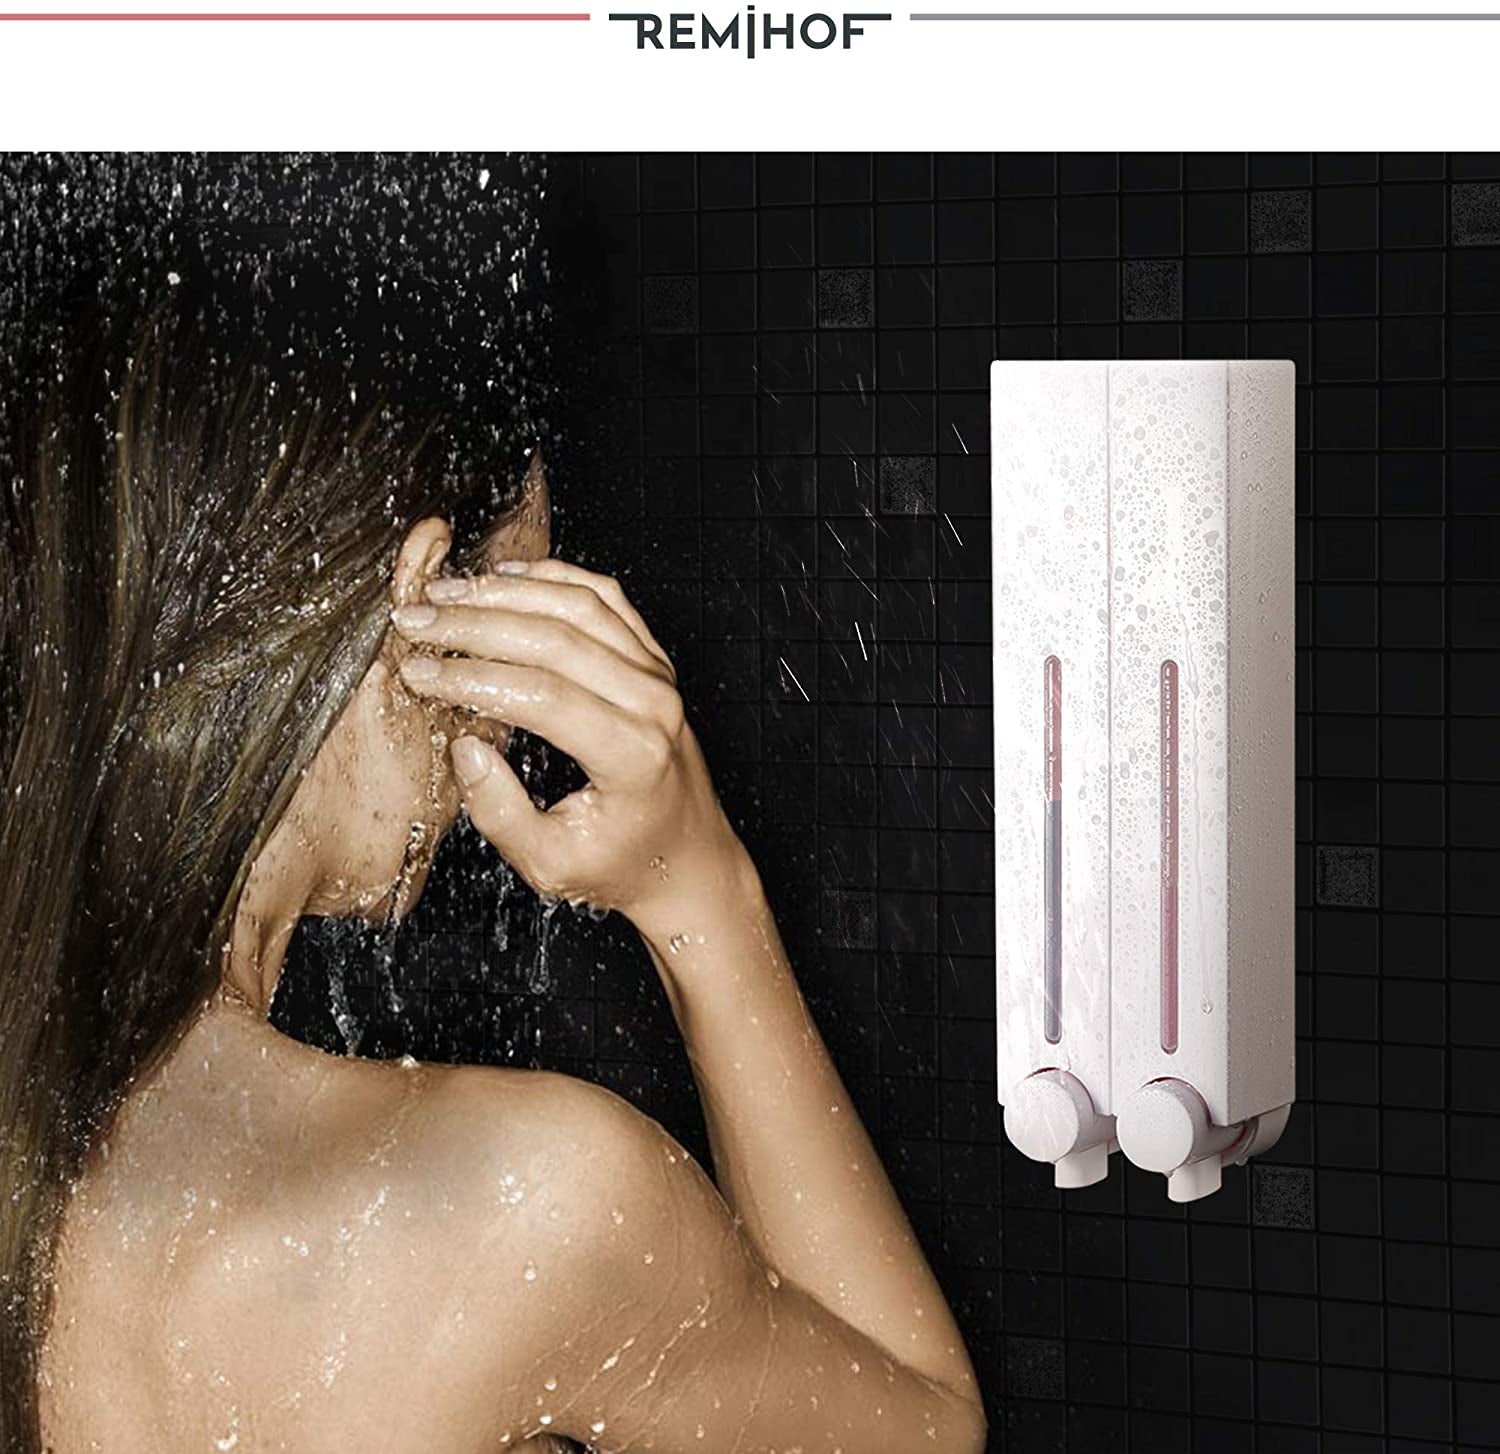 Sleek Soap Dispenser Innovative Wall Mounted Liquid Soap Dispensing Solution For Cosmetics Shampoo Lotion Etc For Bathroom Shower Washrooms